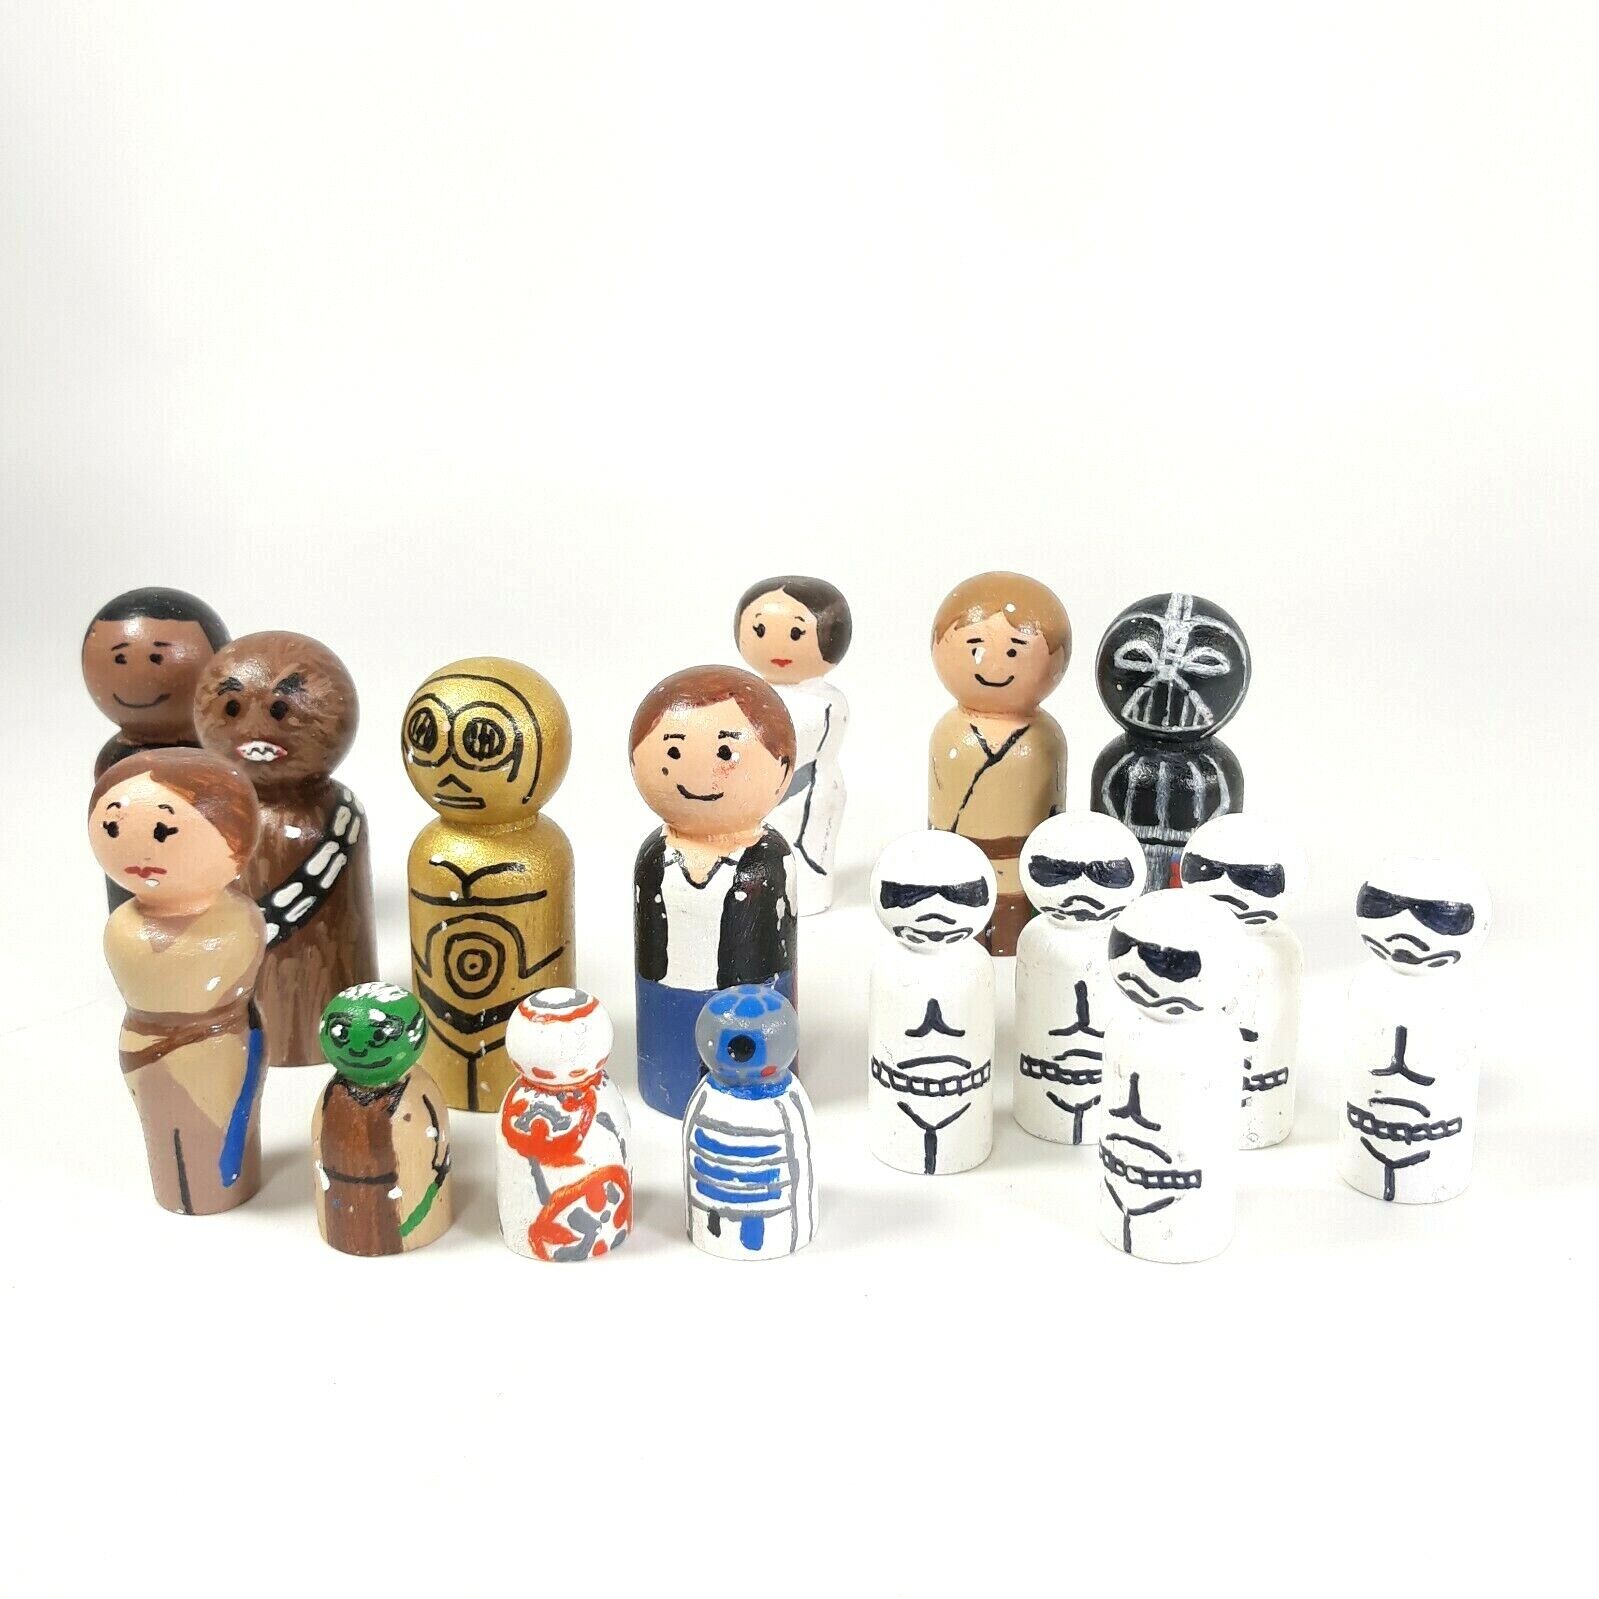 Painted Miniature Wood Peg Doll Figurines Star Wars Yoda Luke Darth Lot of 16